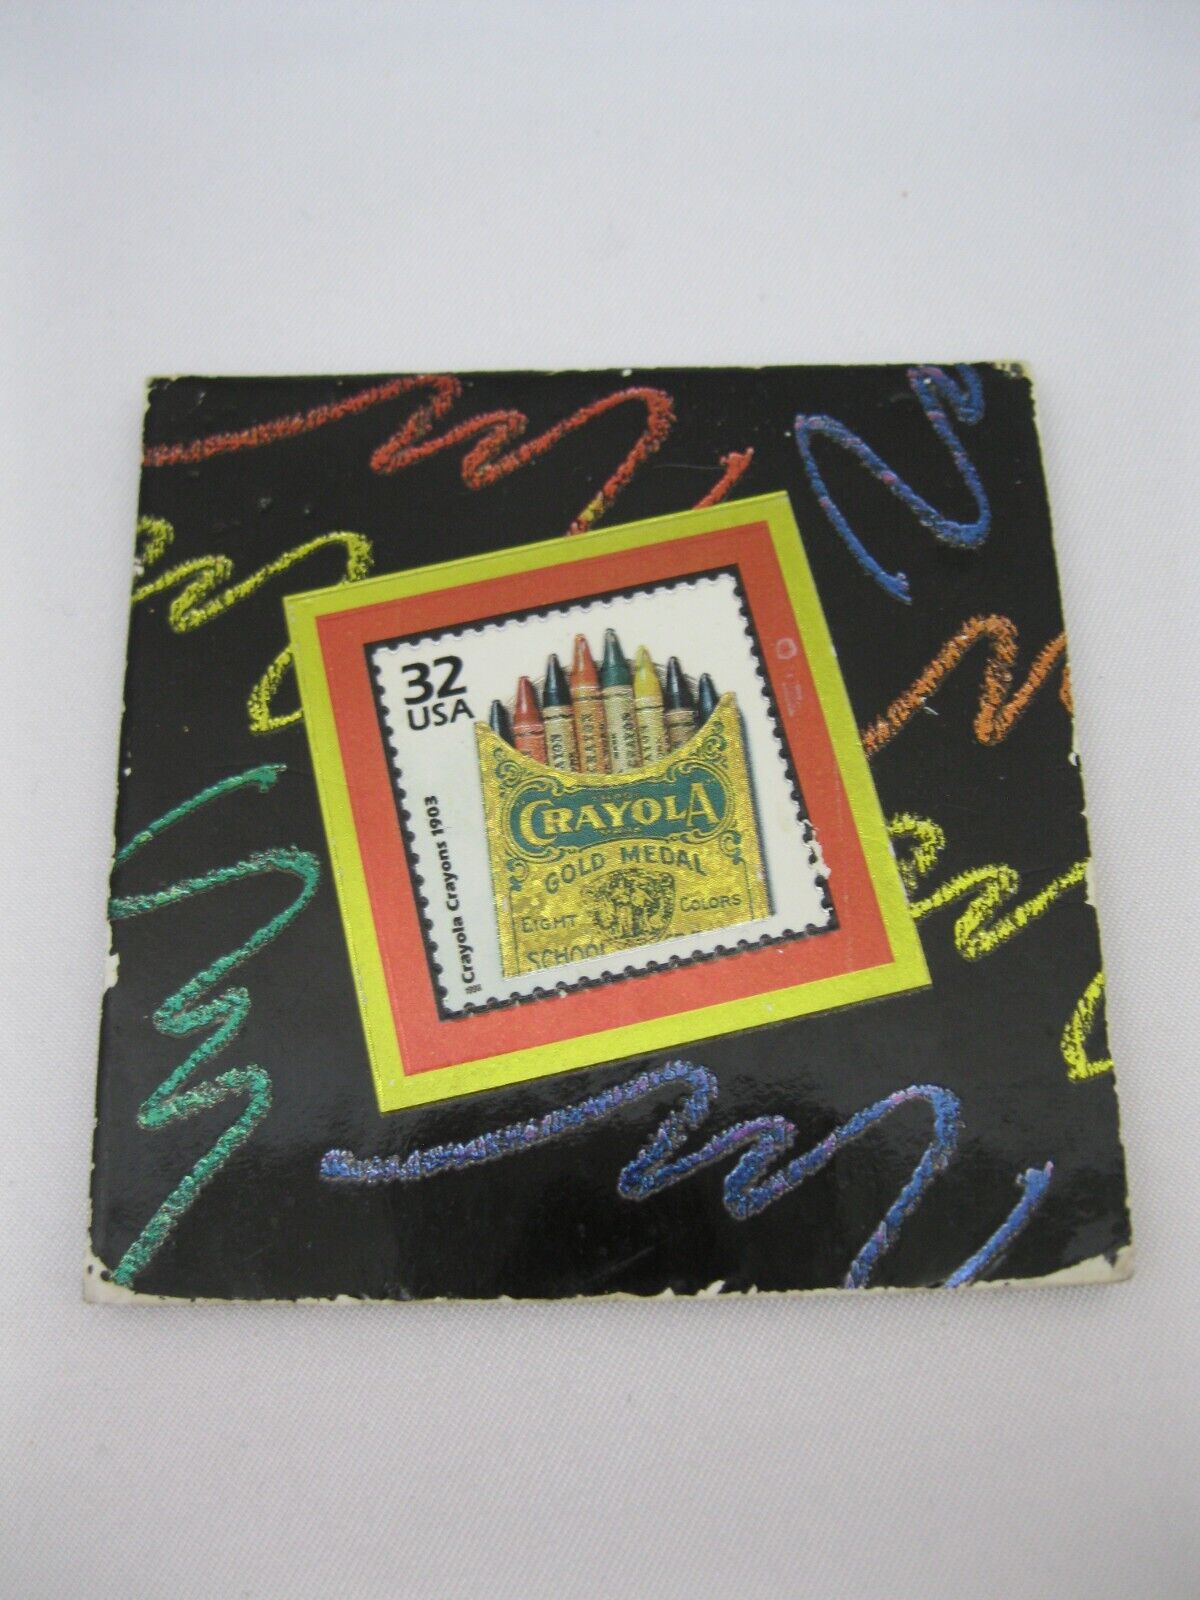 Crayola Crayons Gold Medal 32 Cent USA 1903 Stamp Image Fridge Magnet Scribbles